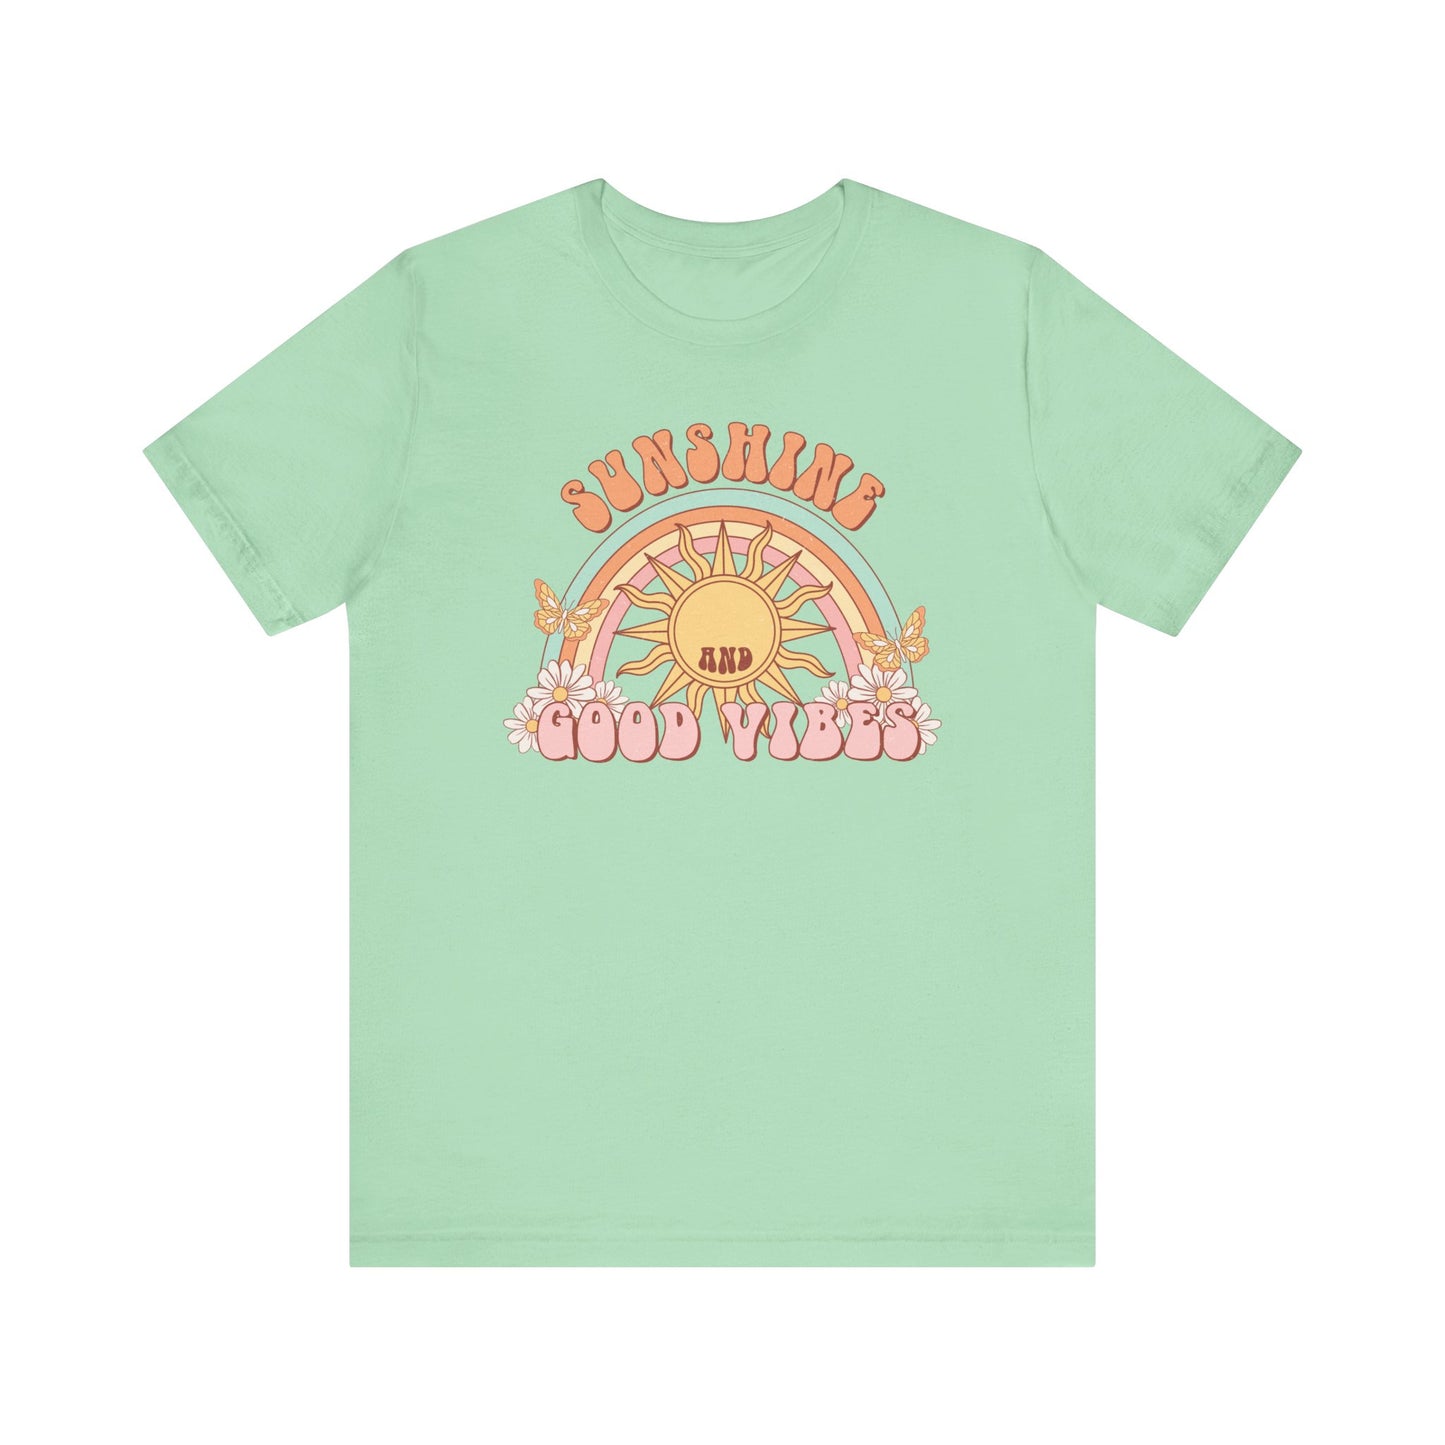 Retro Sunshine and Good Vibes Graphic Tee, Vintage Style T-Shirt, Summer Festival Casual Top, Boho Rainbow Shirt